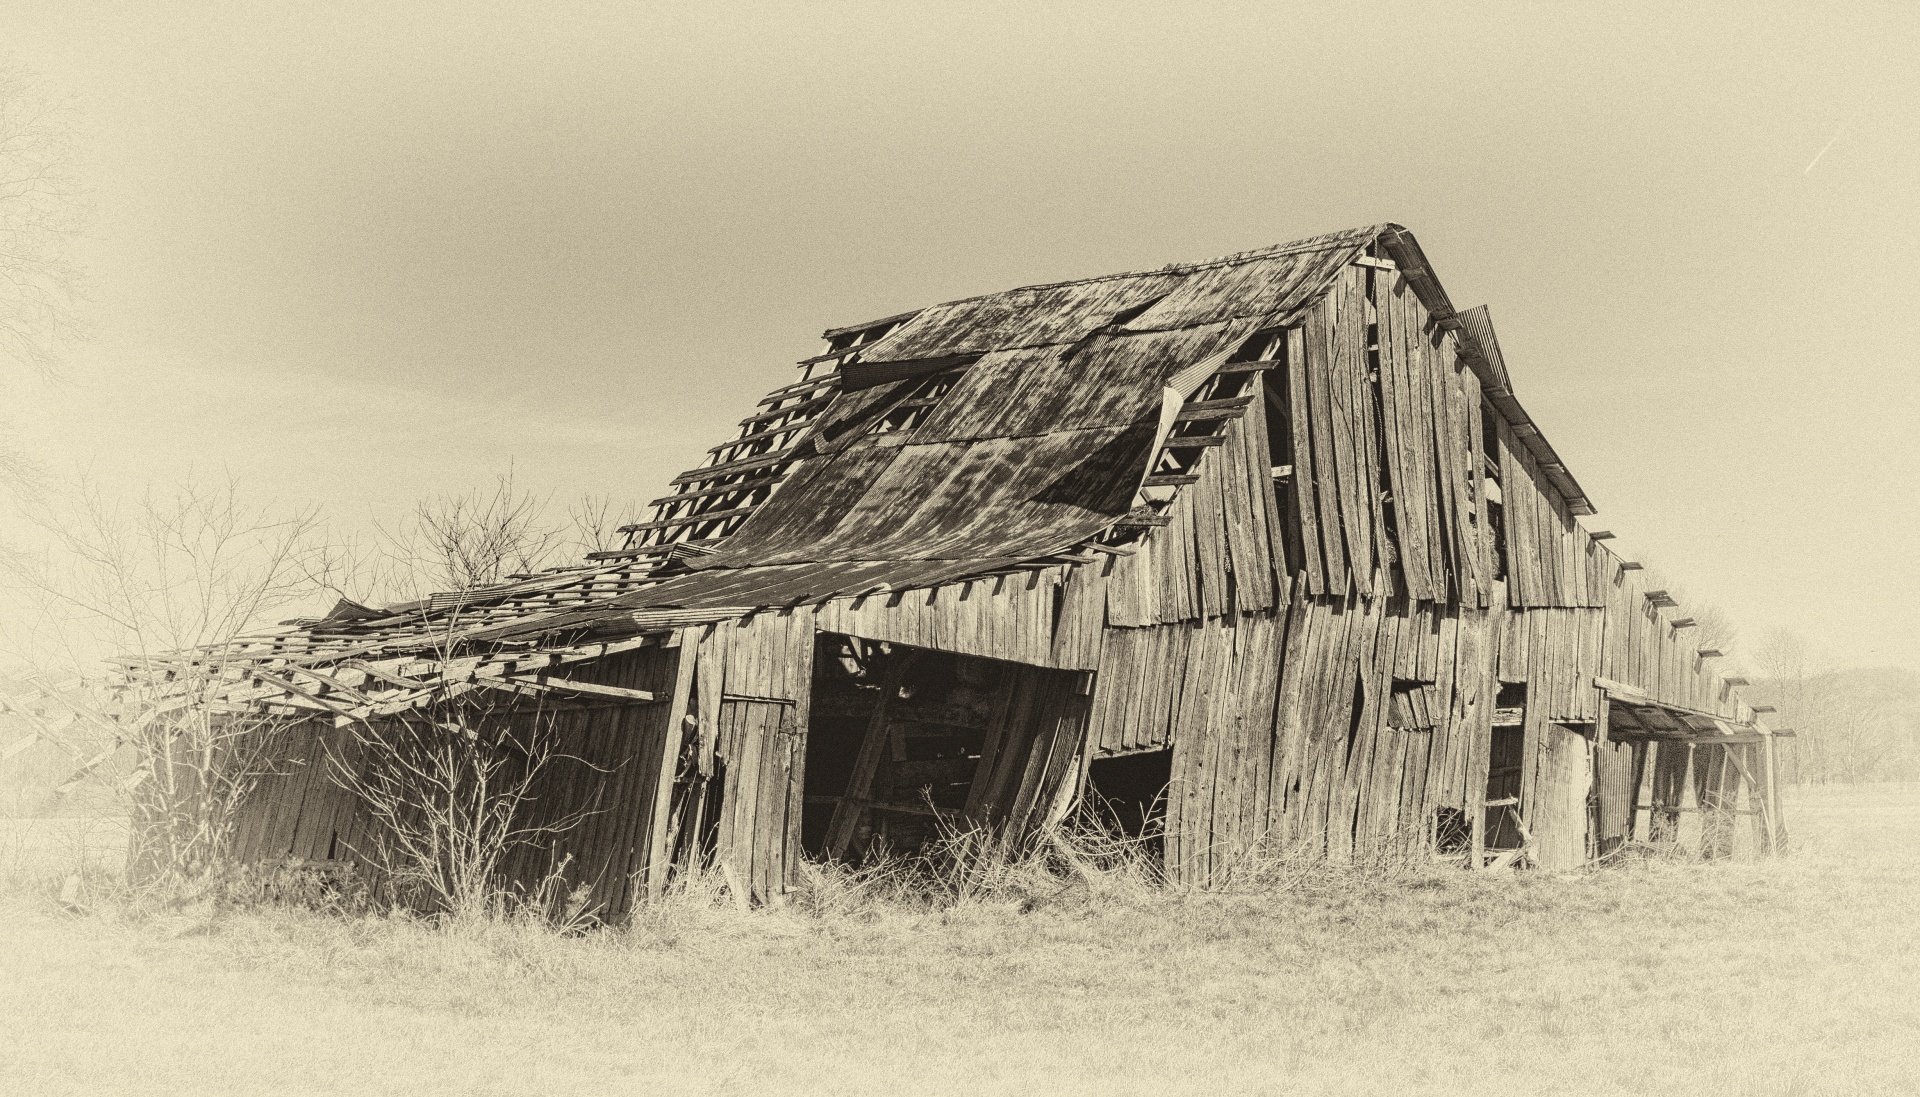 Decaying barn in rural America.